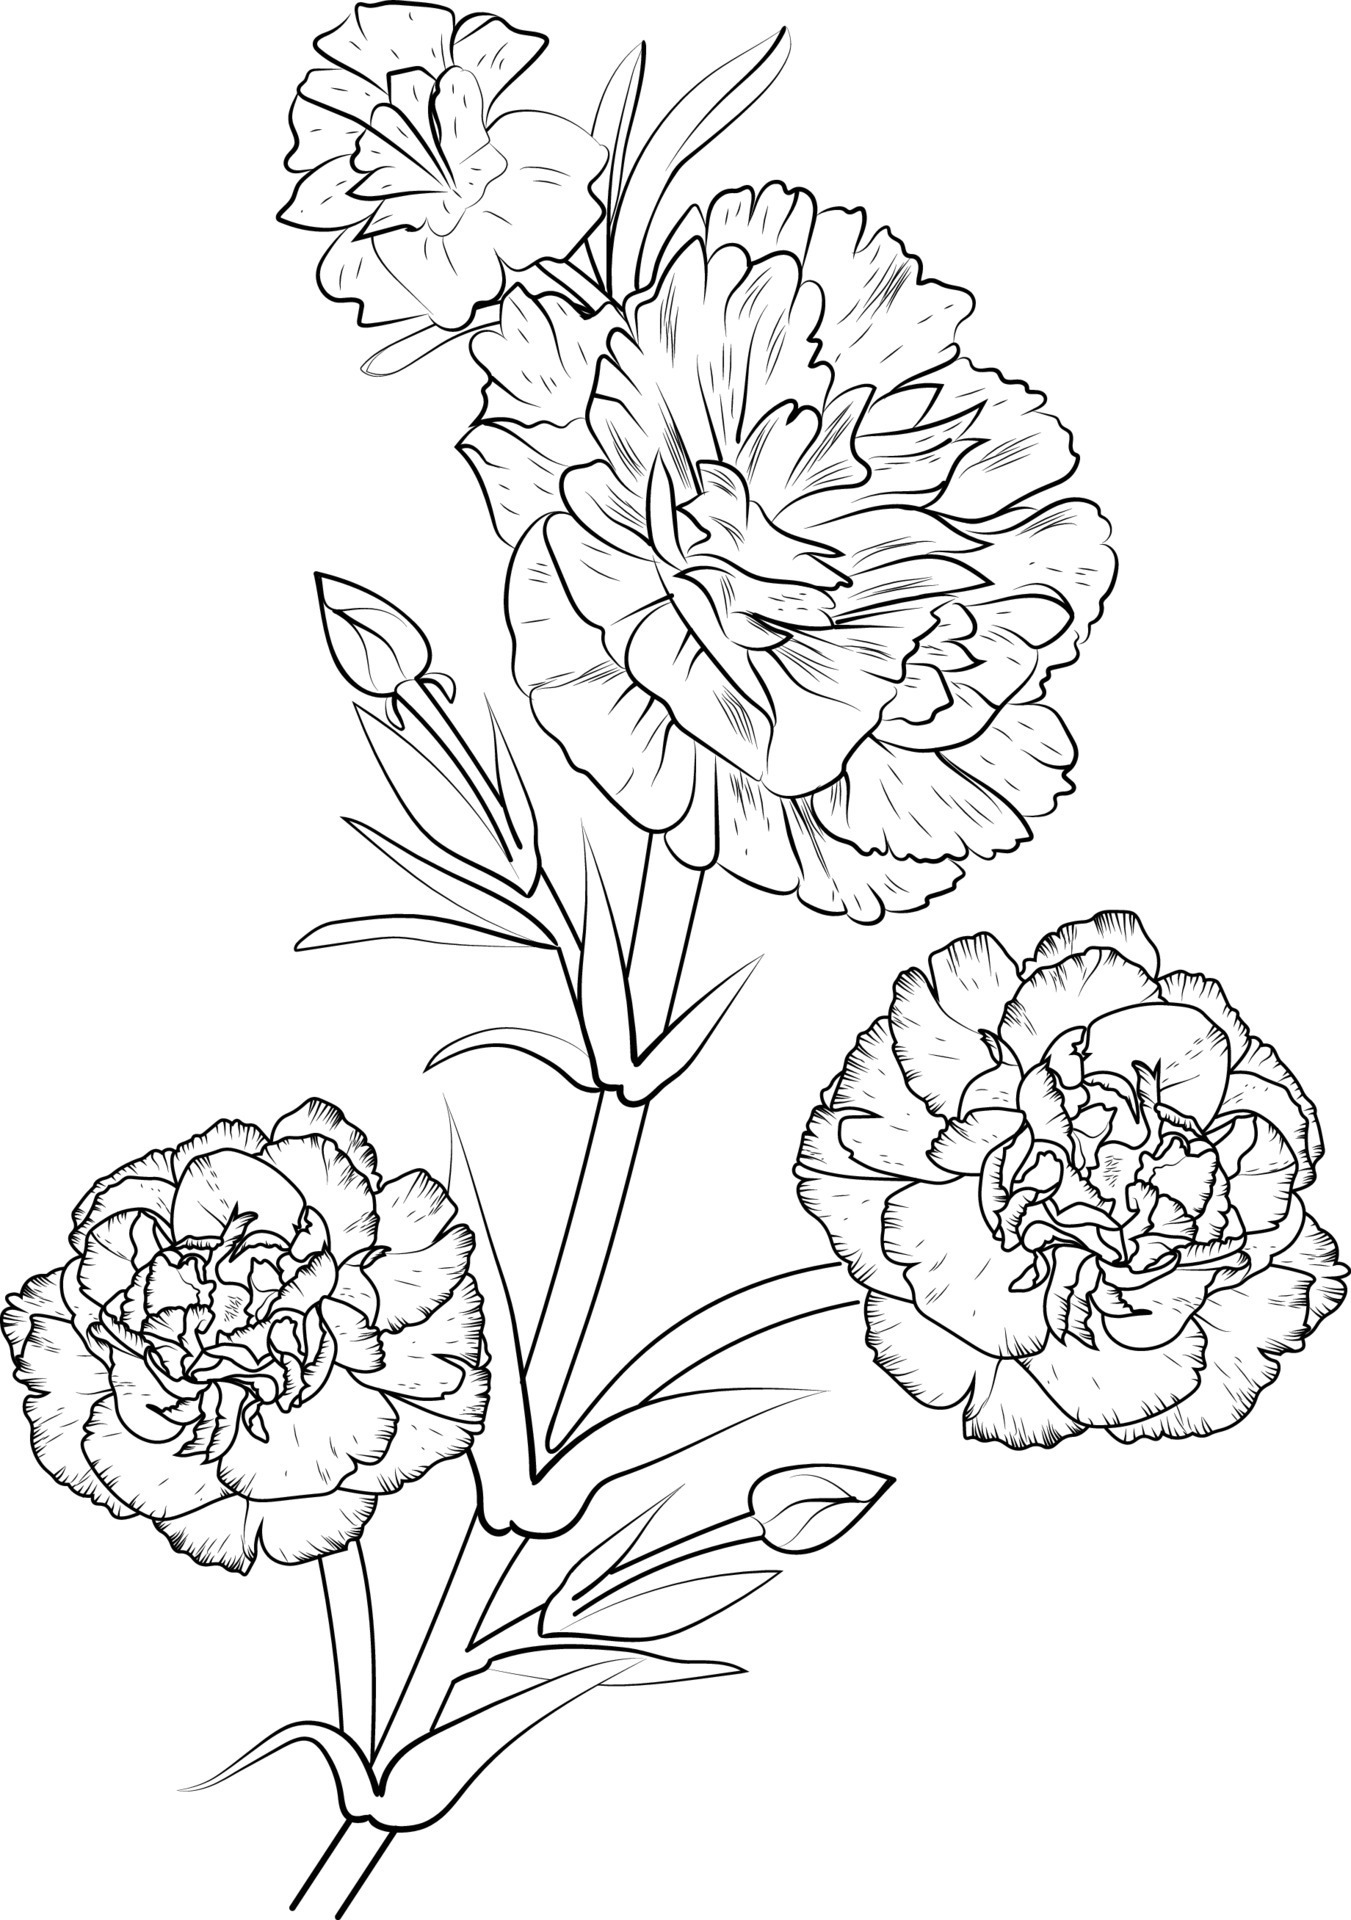 Dianthus carnation flowers sketch engraving Vector Image